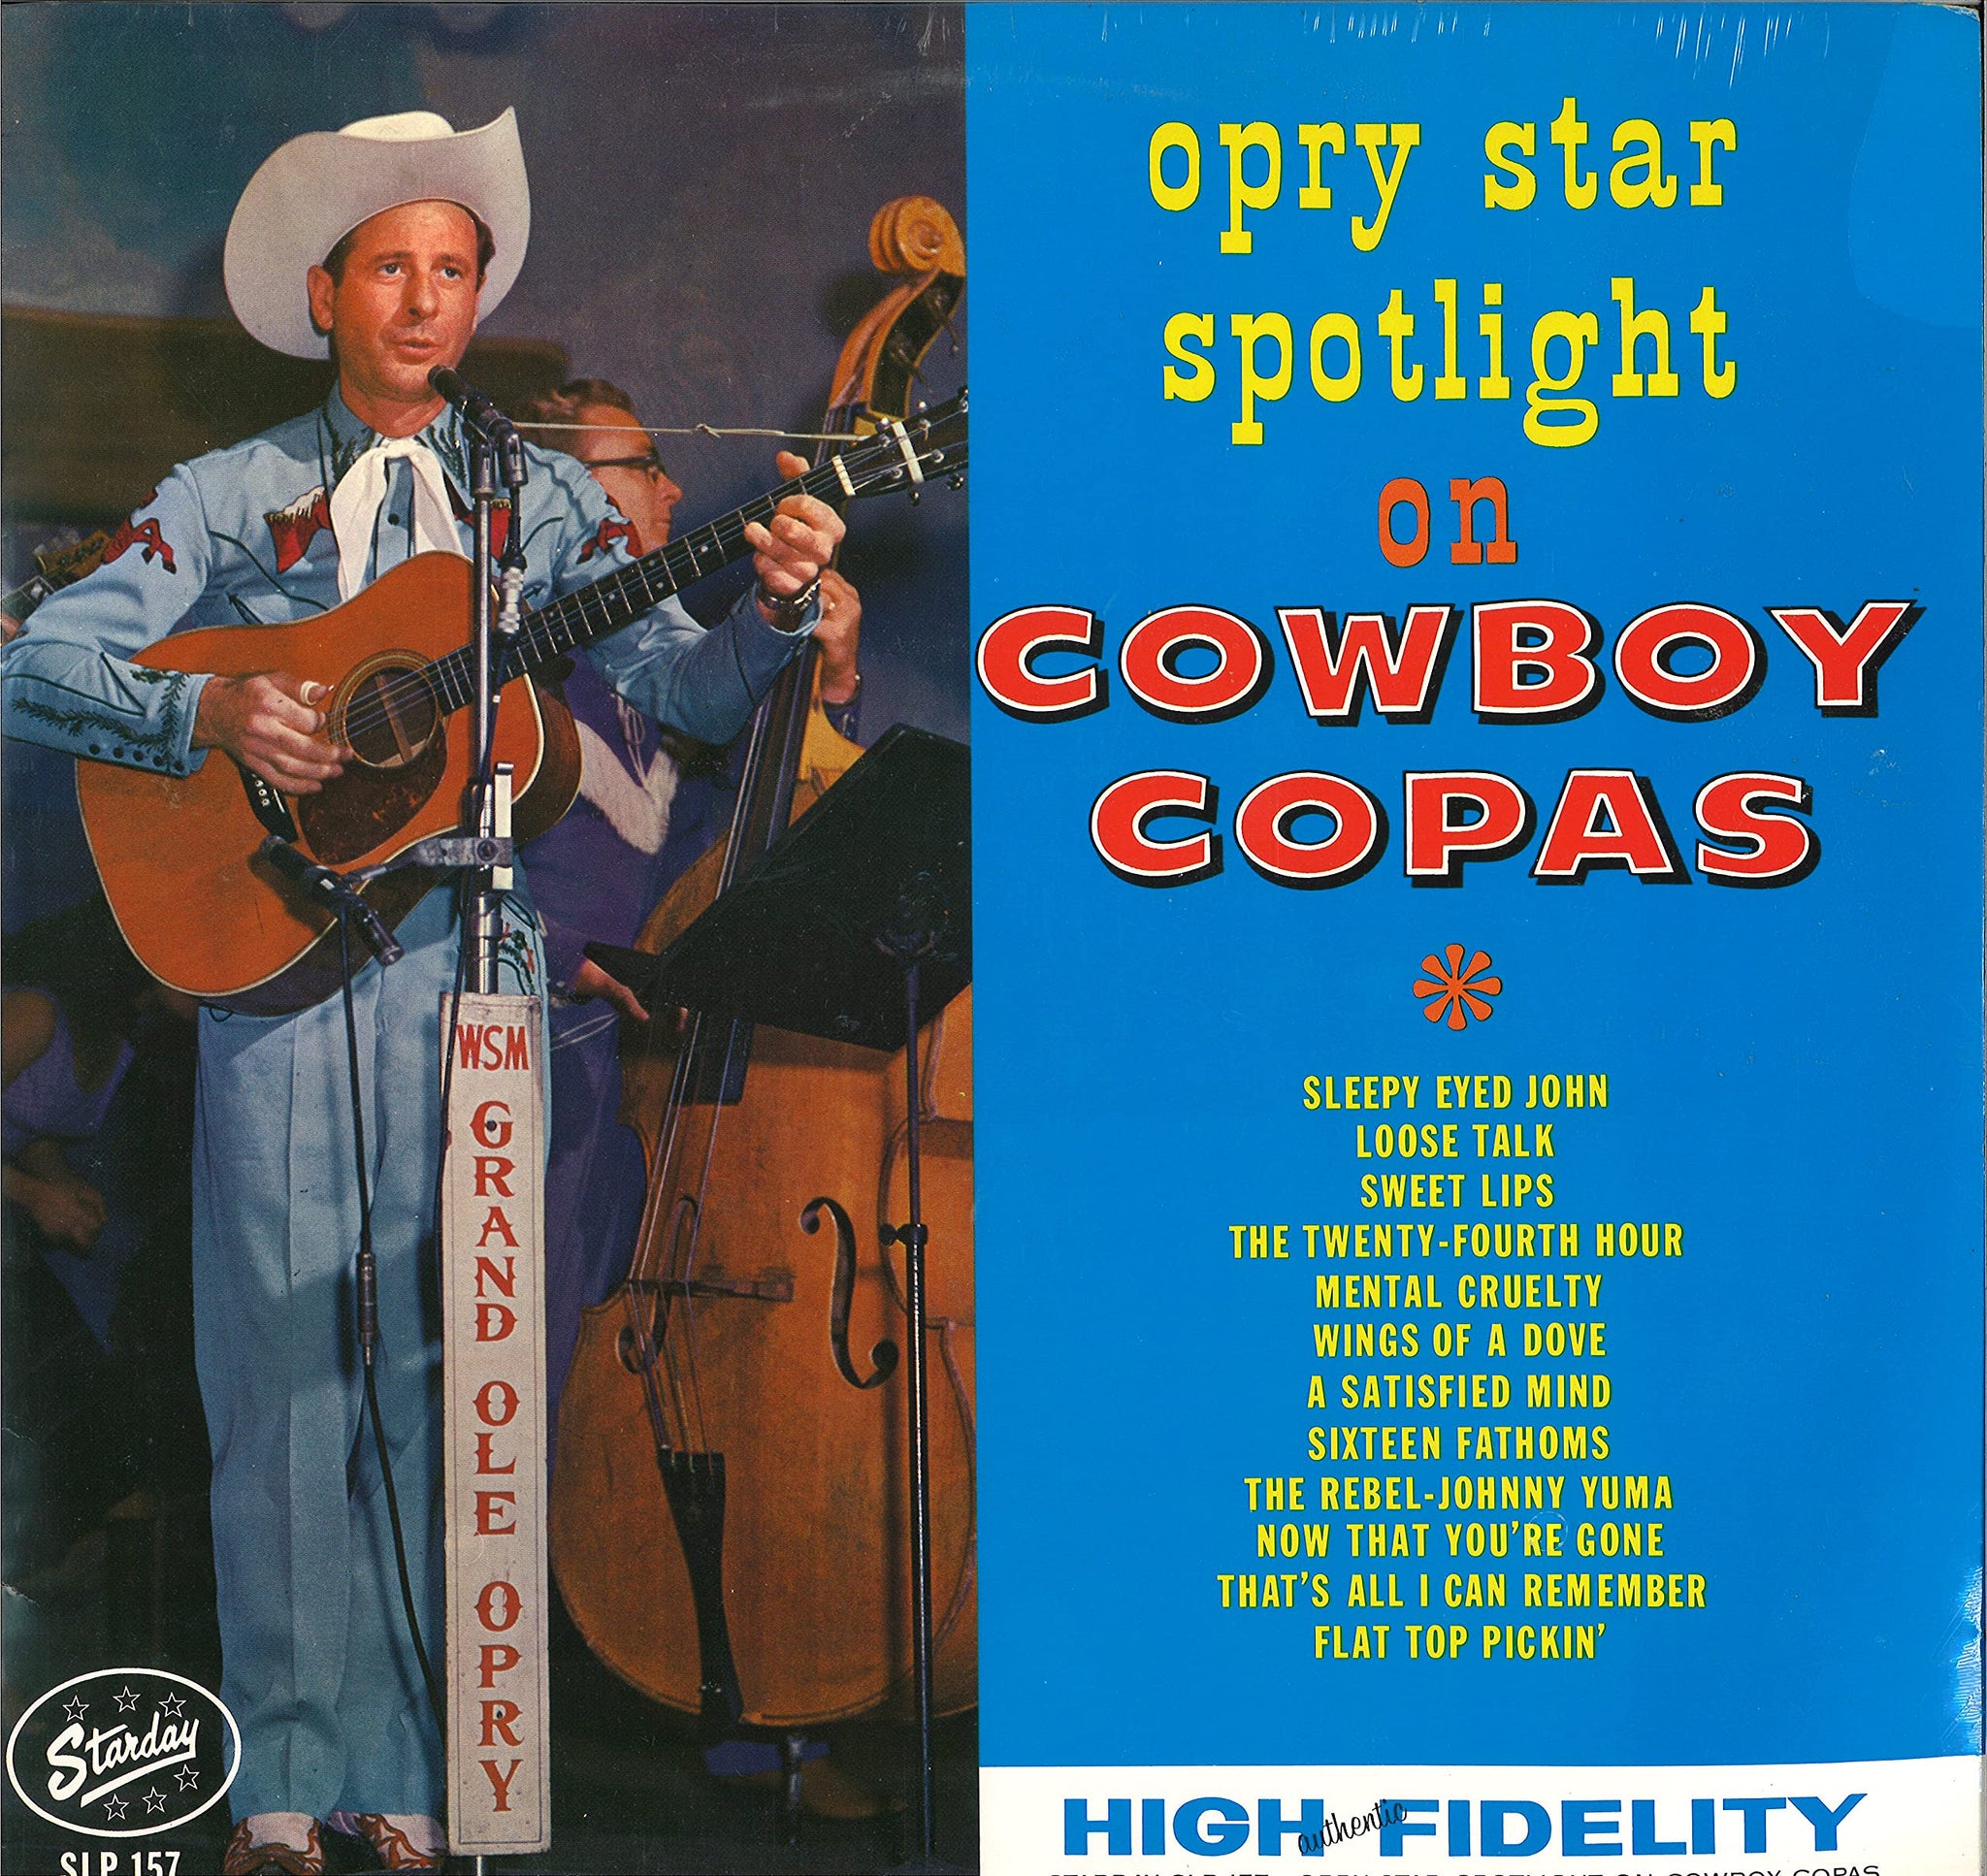 Opry Star Spotlight on Cowboy Copas